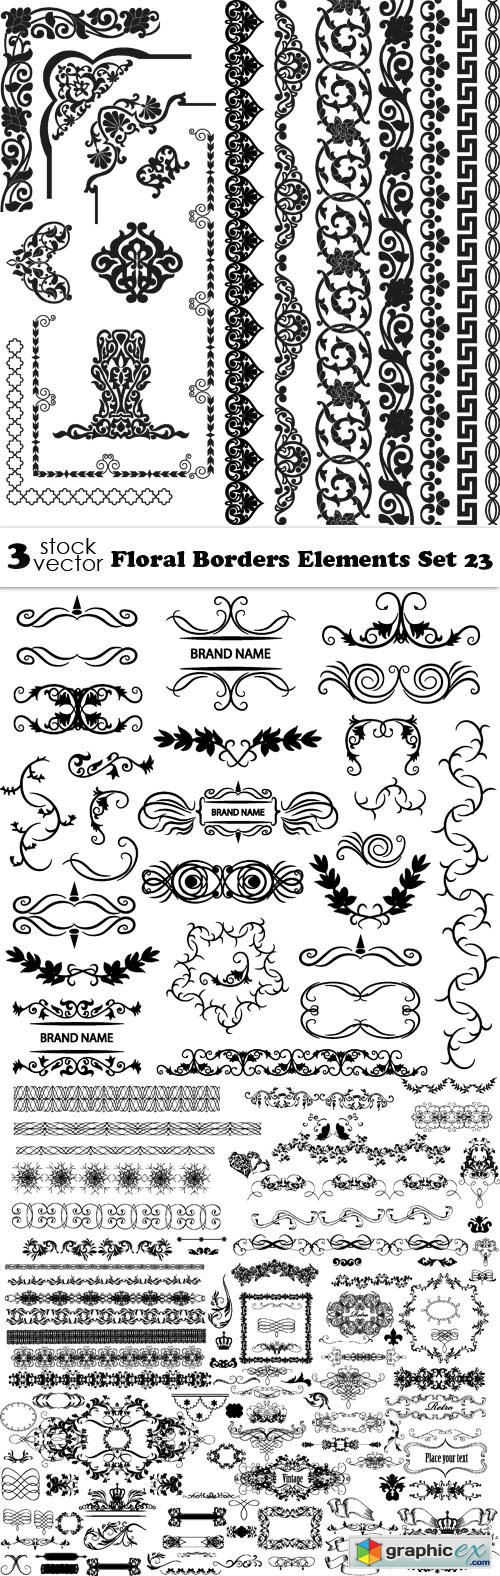 Floral Borders Elements Set 23